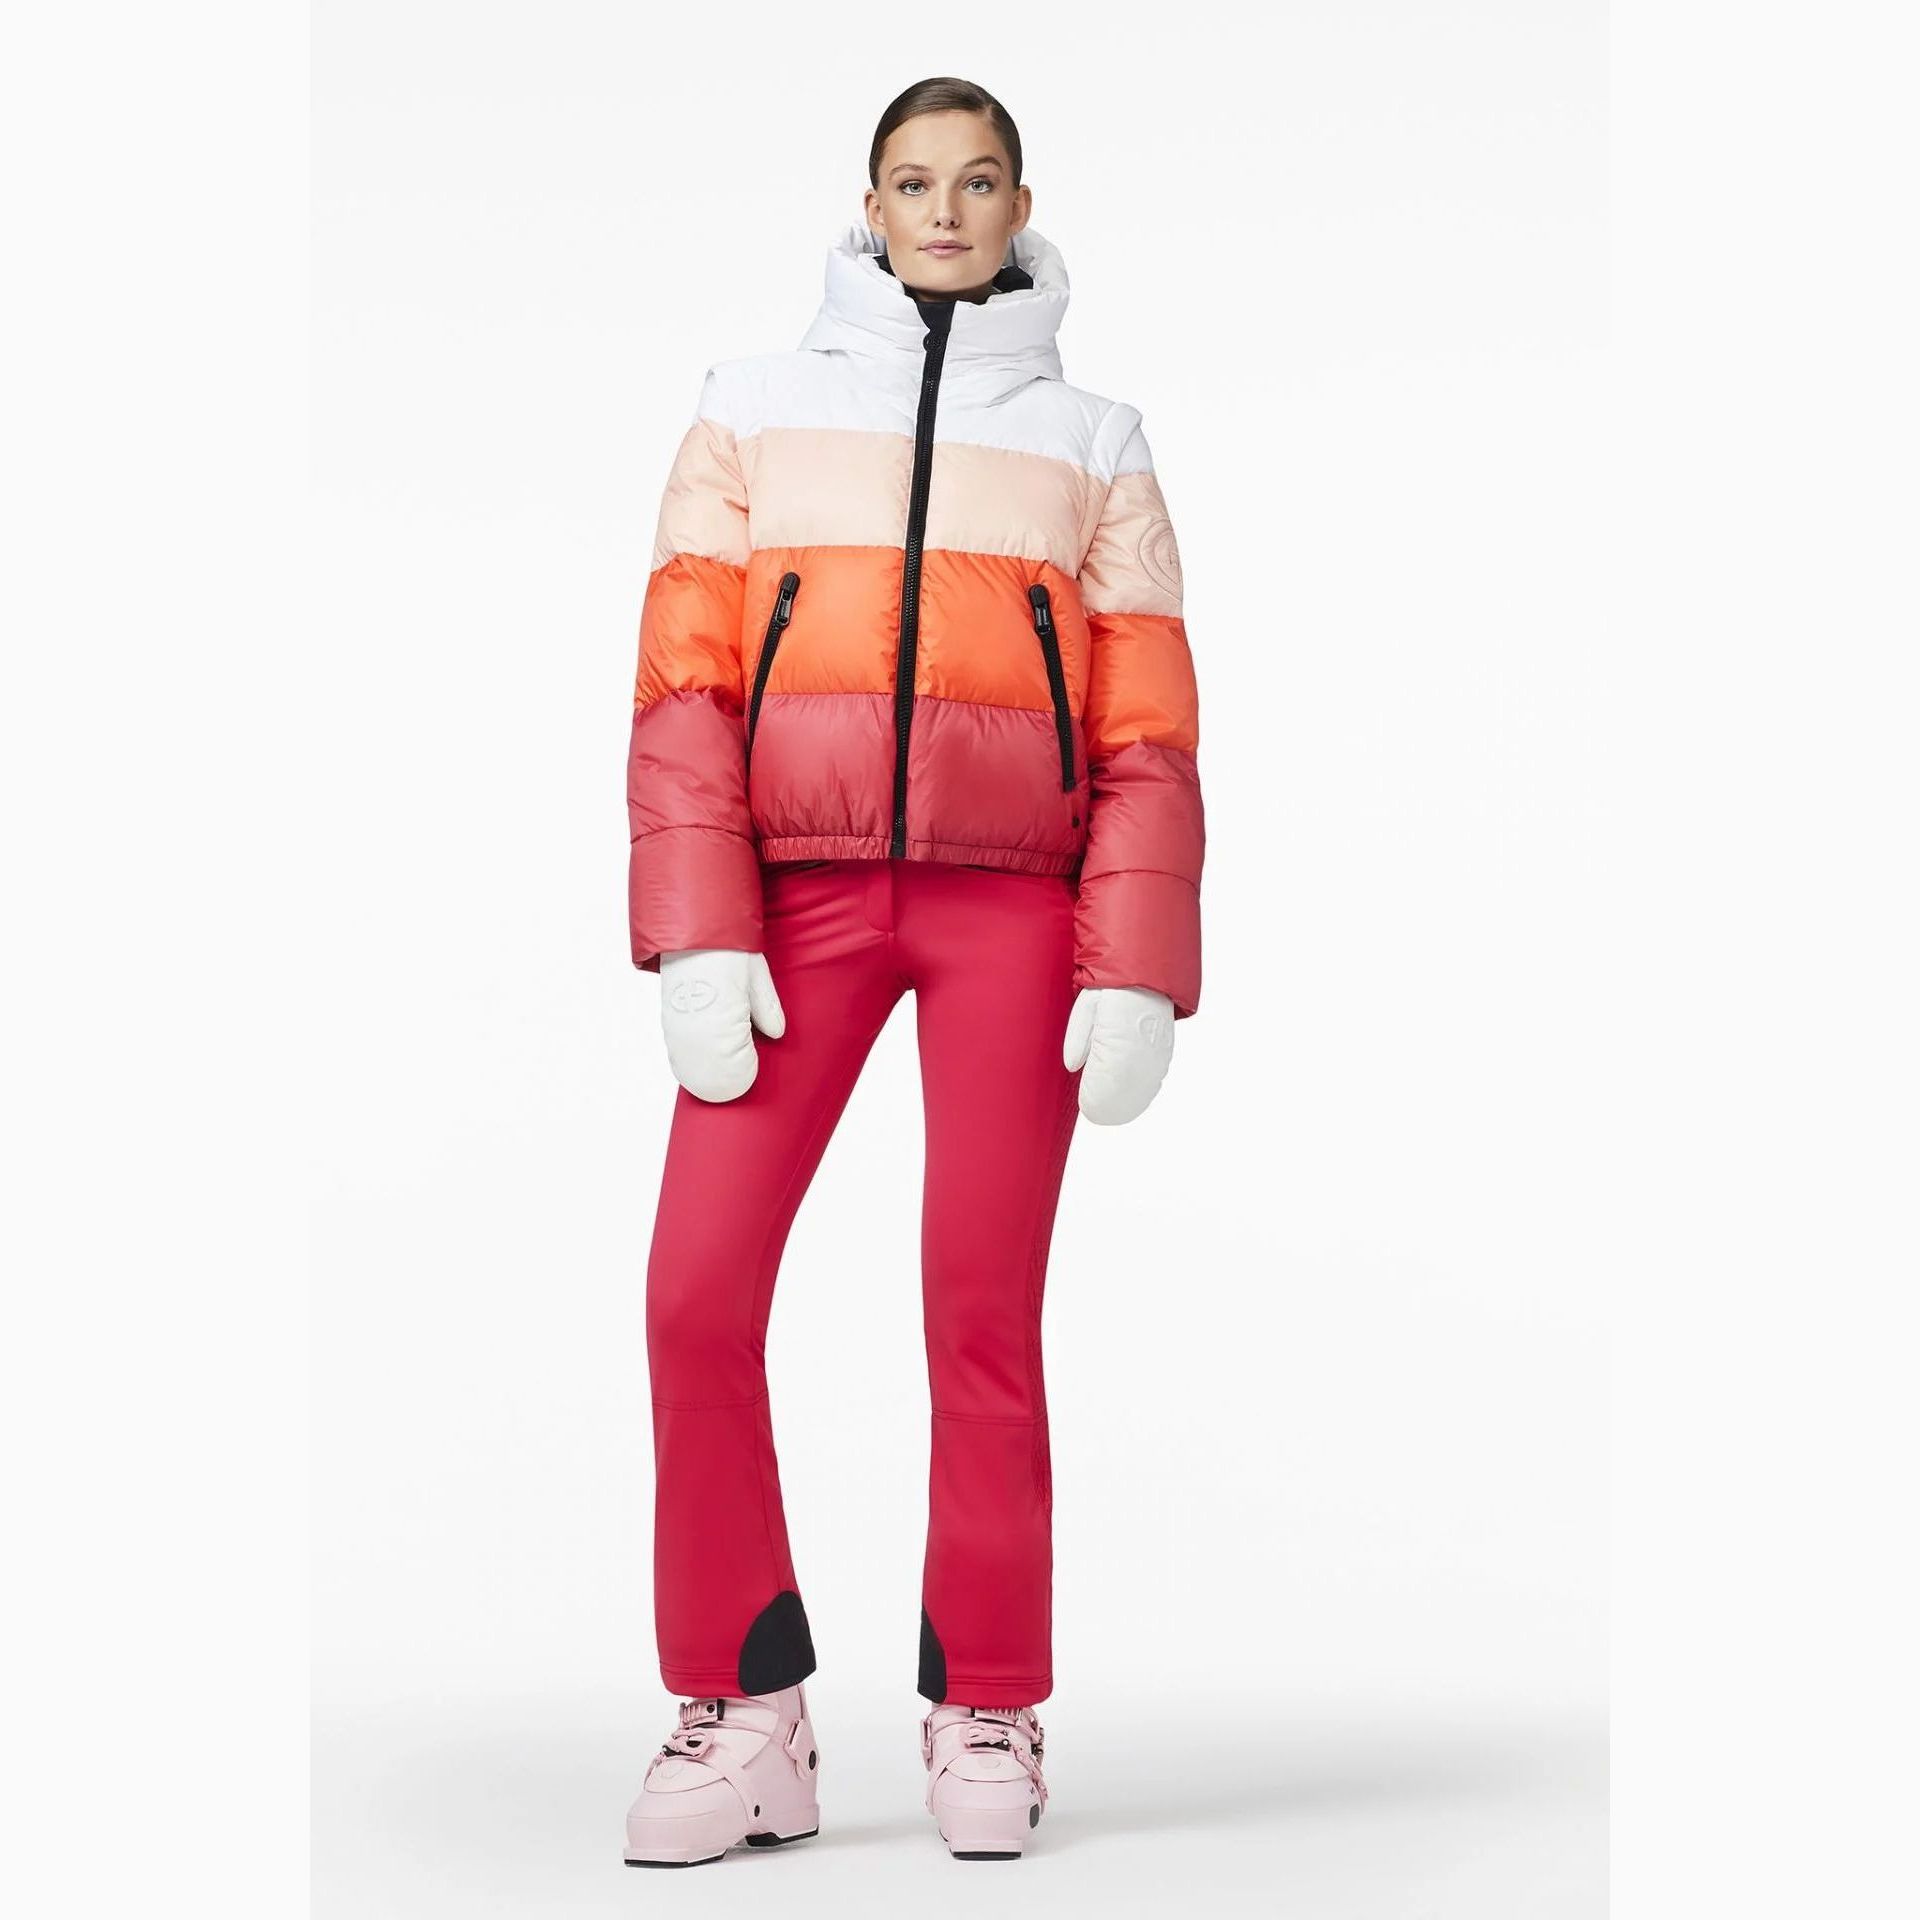 Geci Ski & Snow -  goldbergh BLISS Jacket